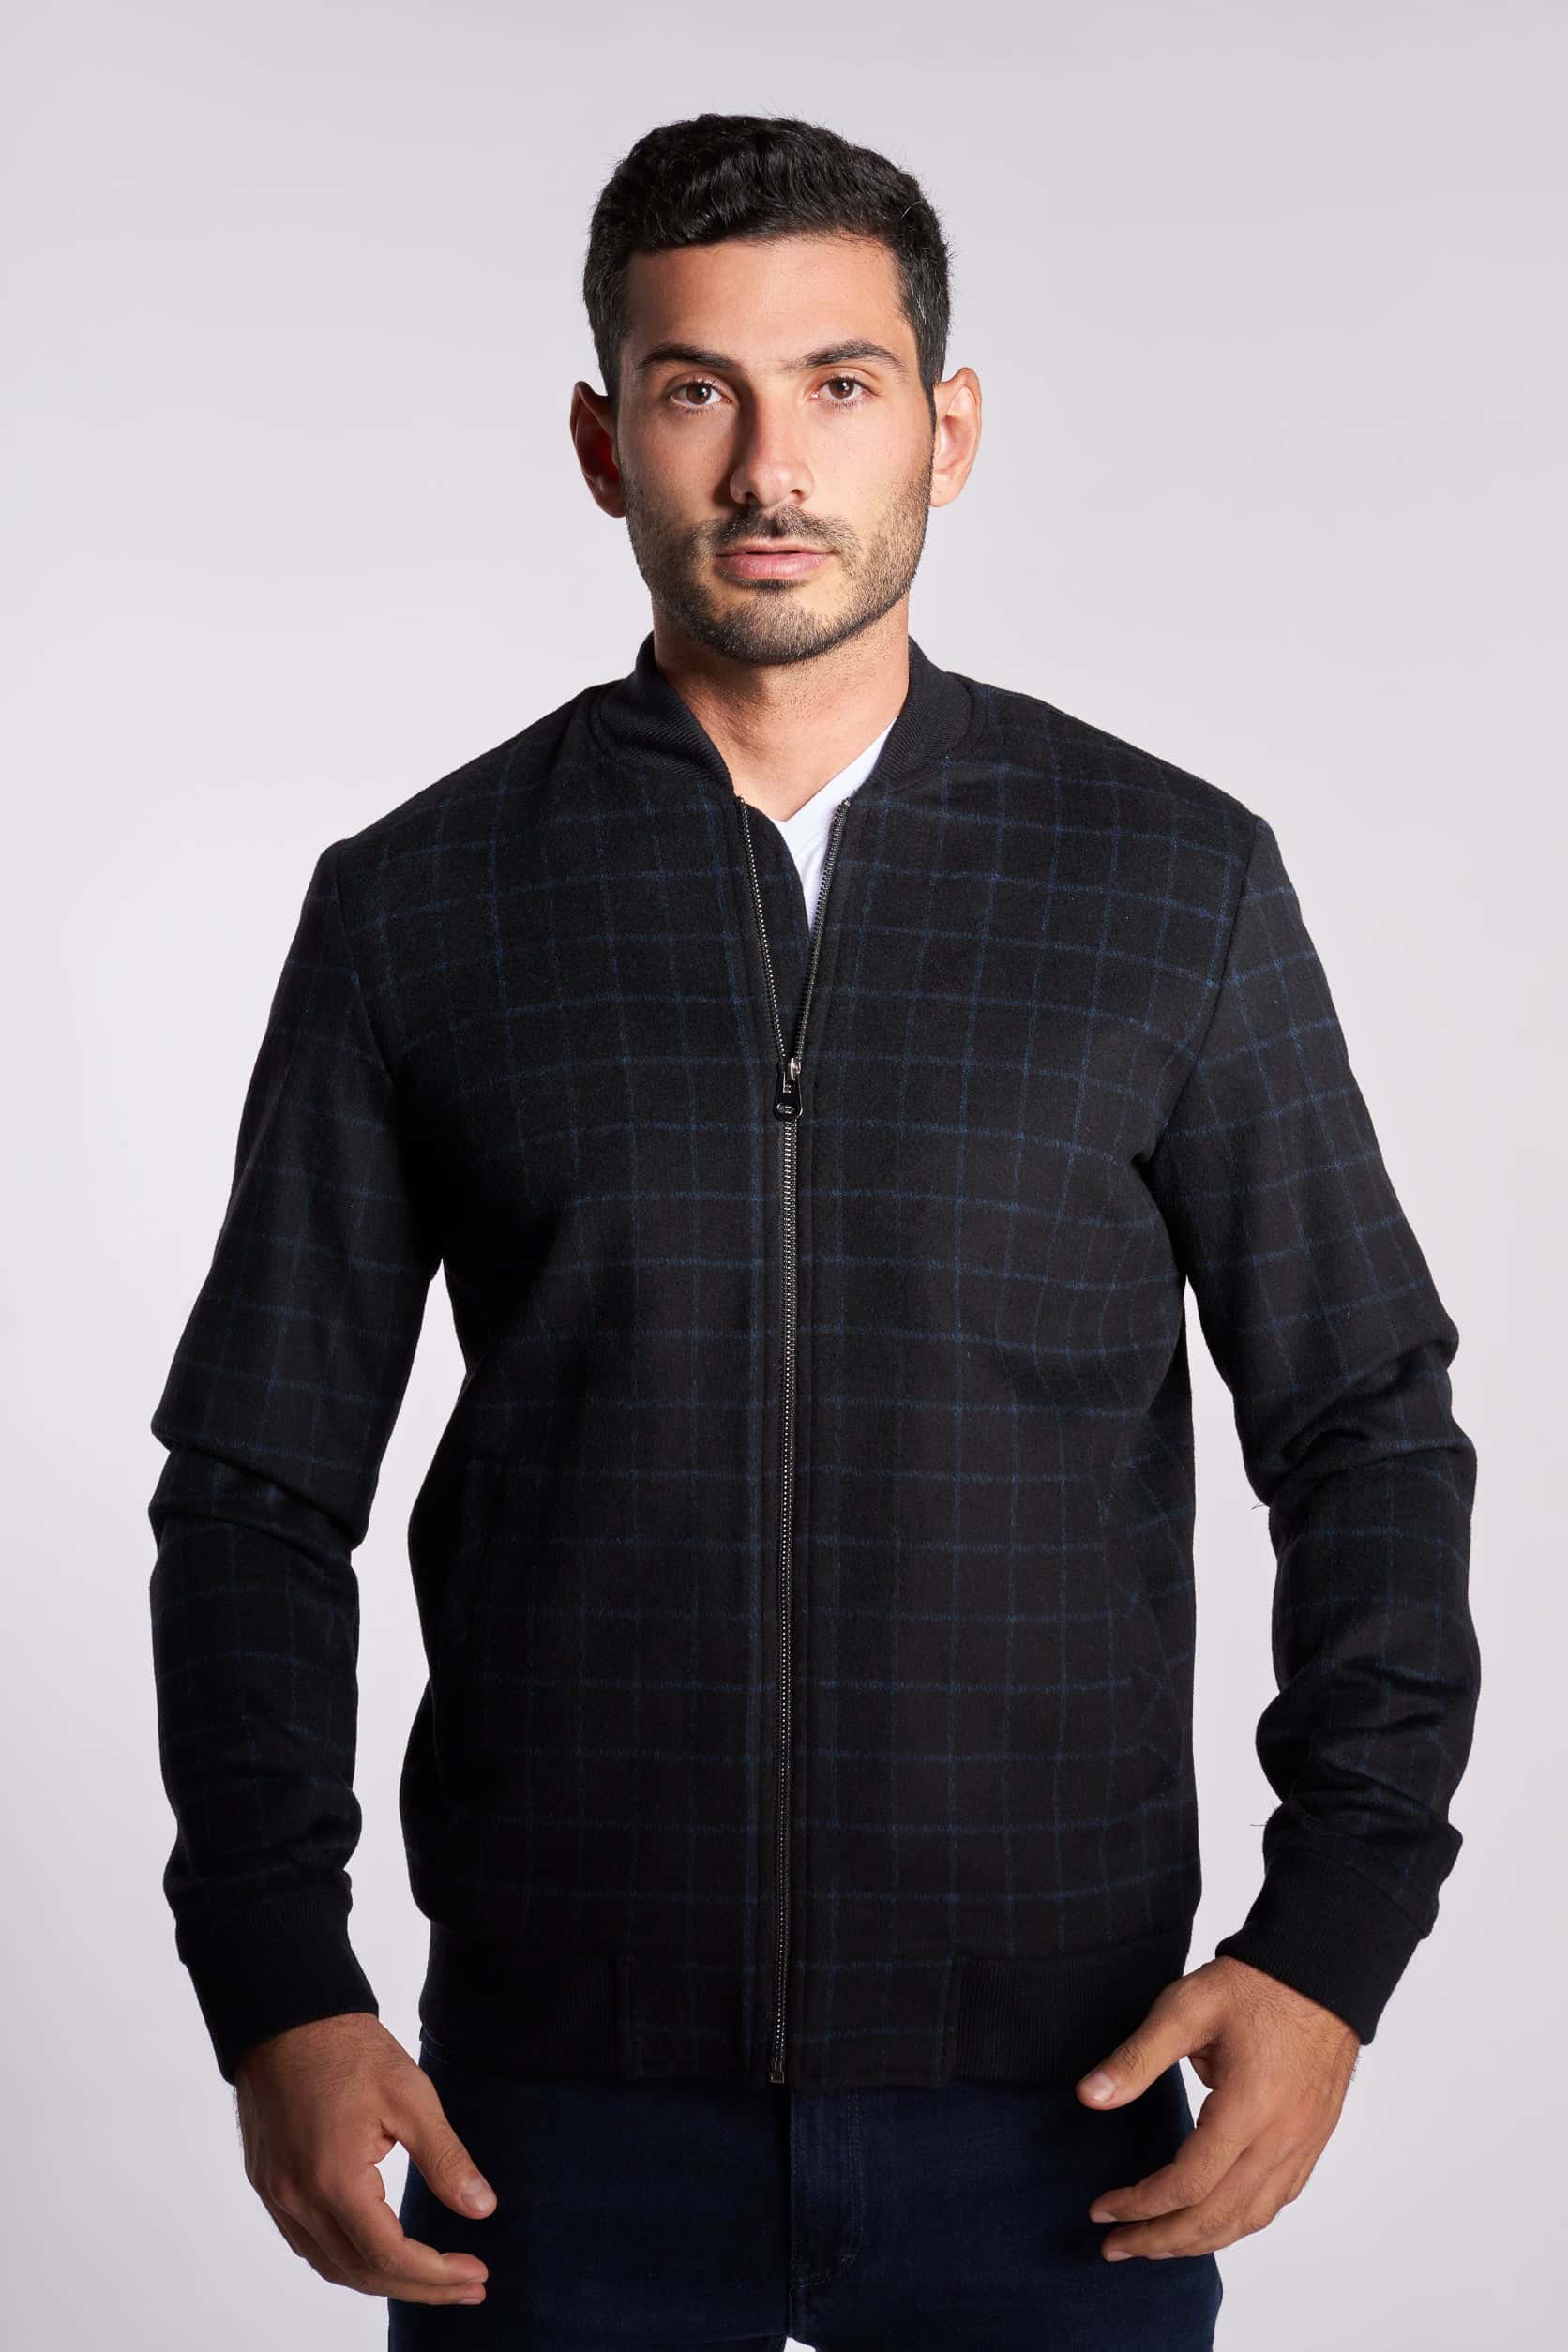 Black and blue wool jacket(19)